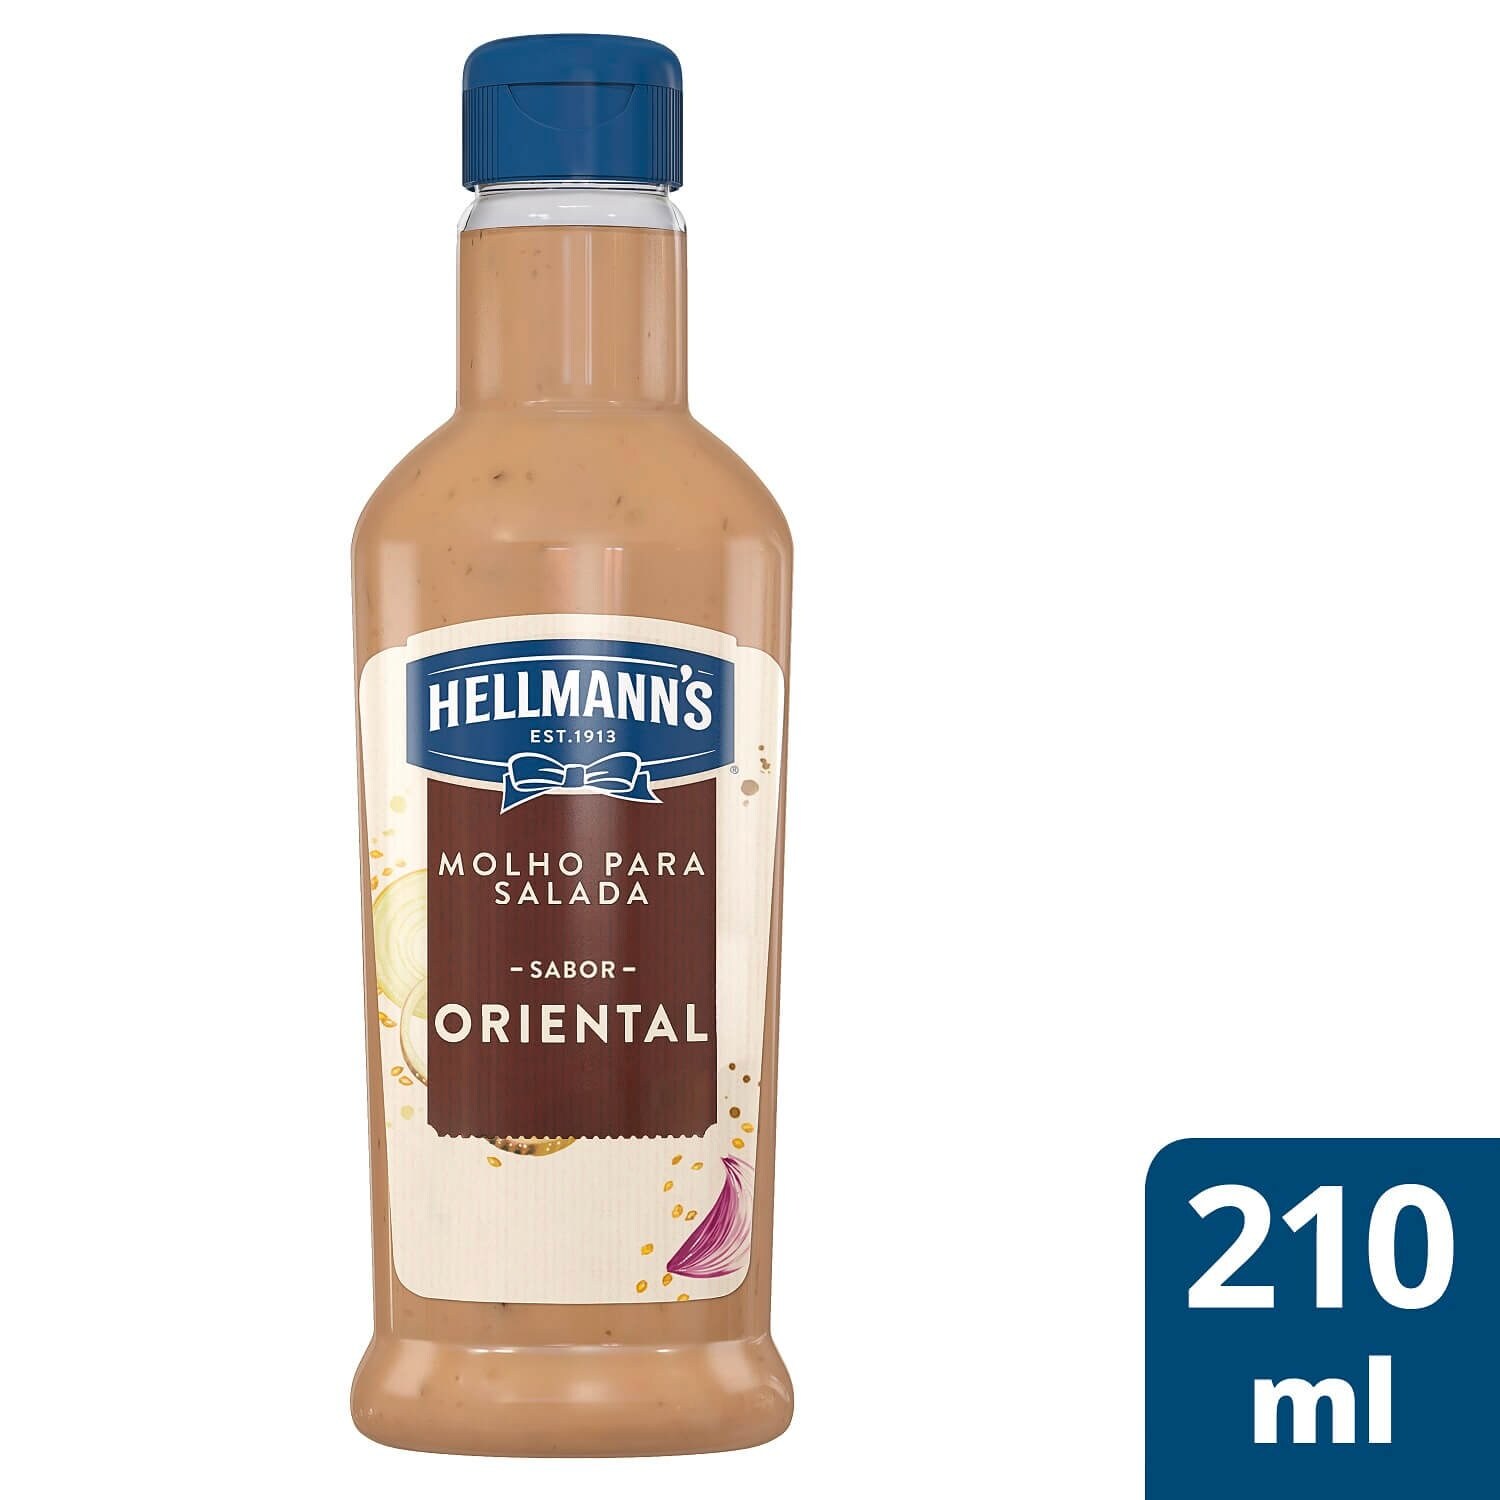 Molho para Salada Hellmann's Oriental 210 ml